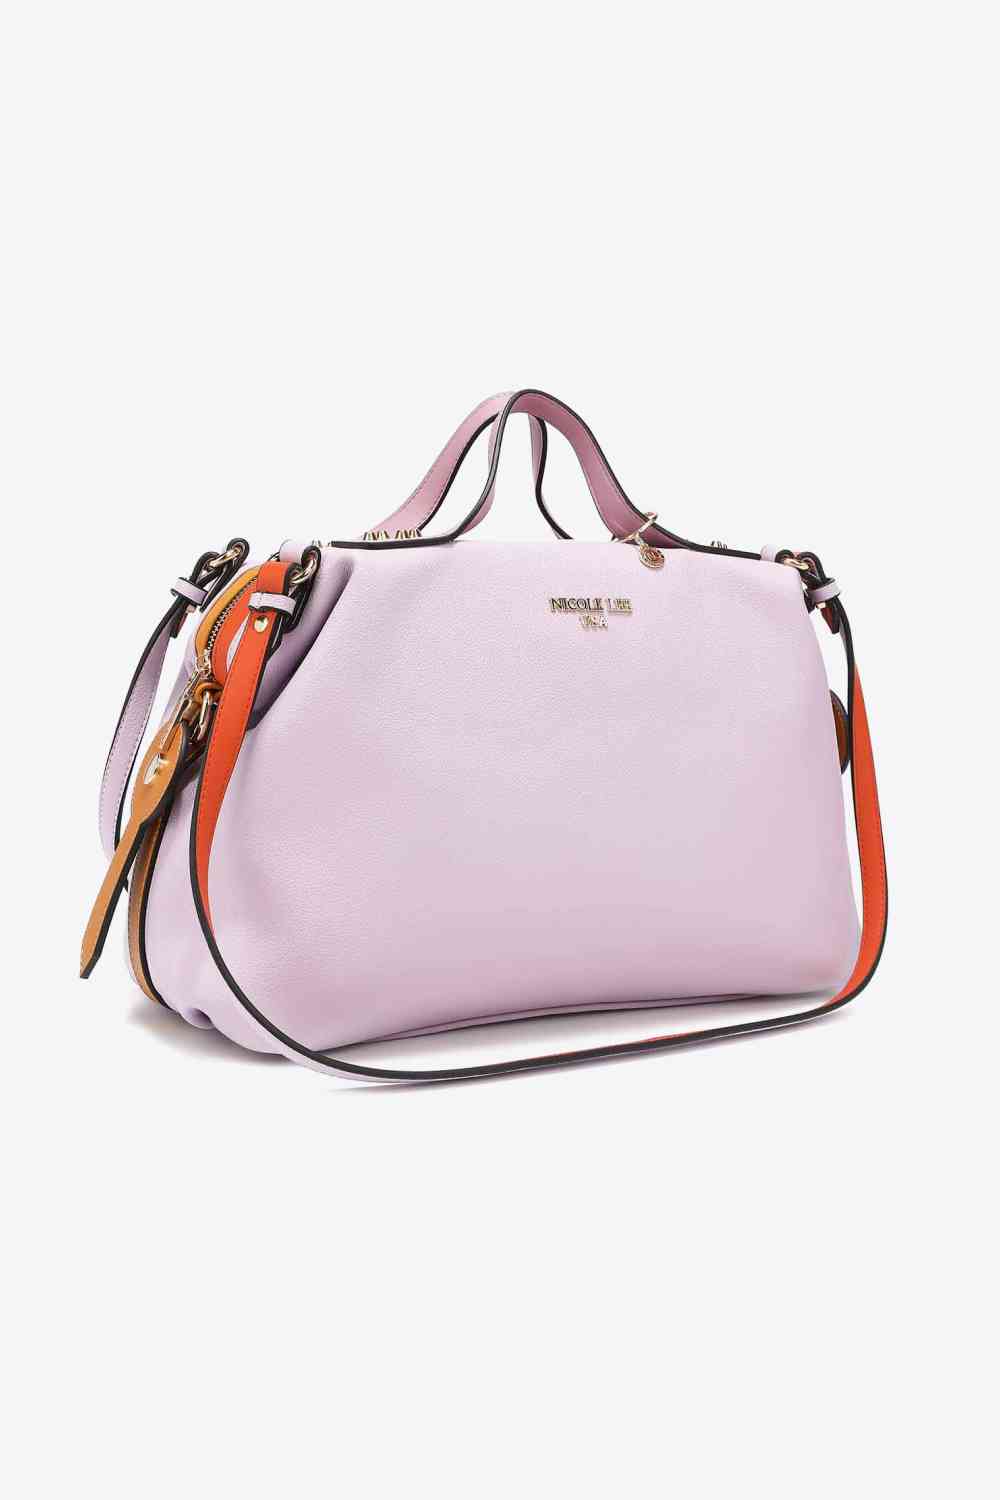 Nicole Lee USA Avery Multi Strap Boston Bag Lavender One Size